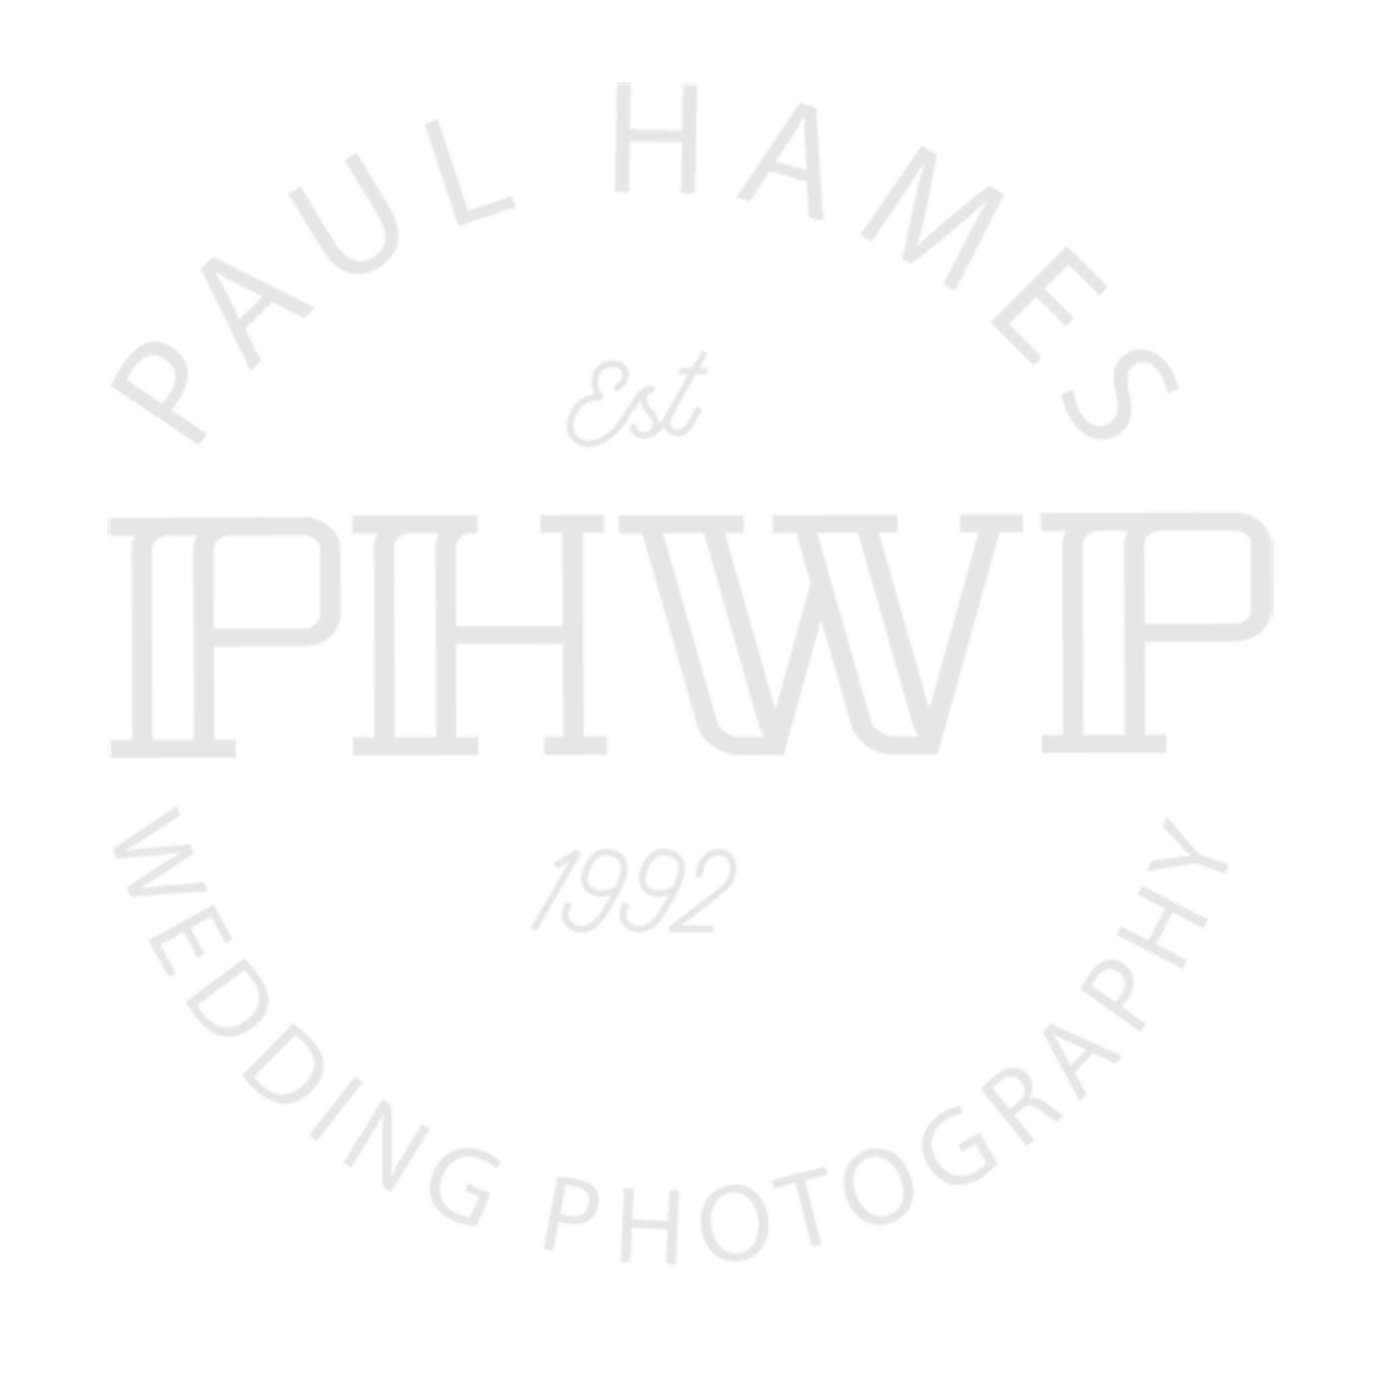 Dorset Professional Wedding Photographer